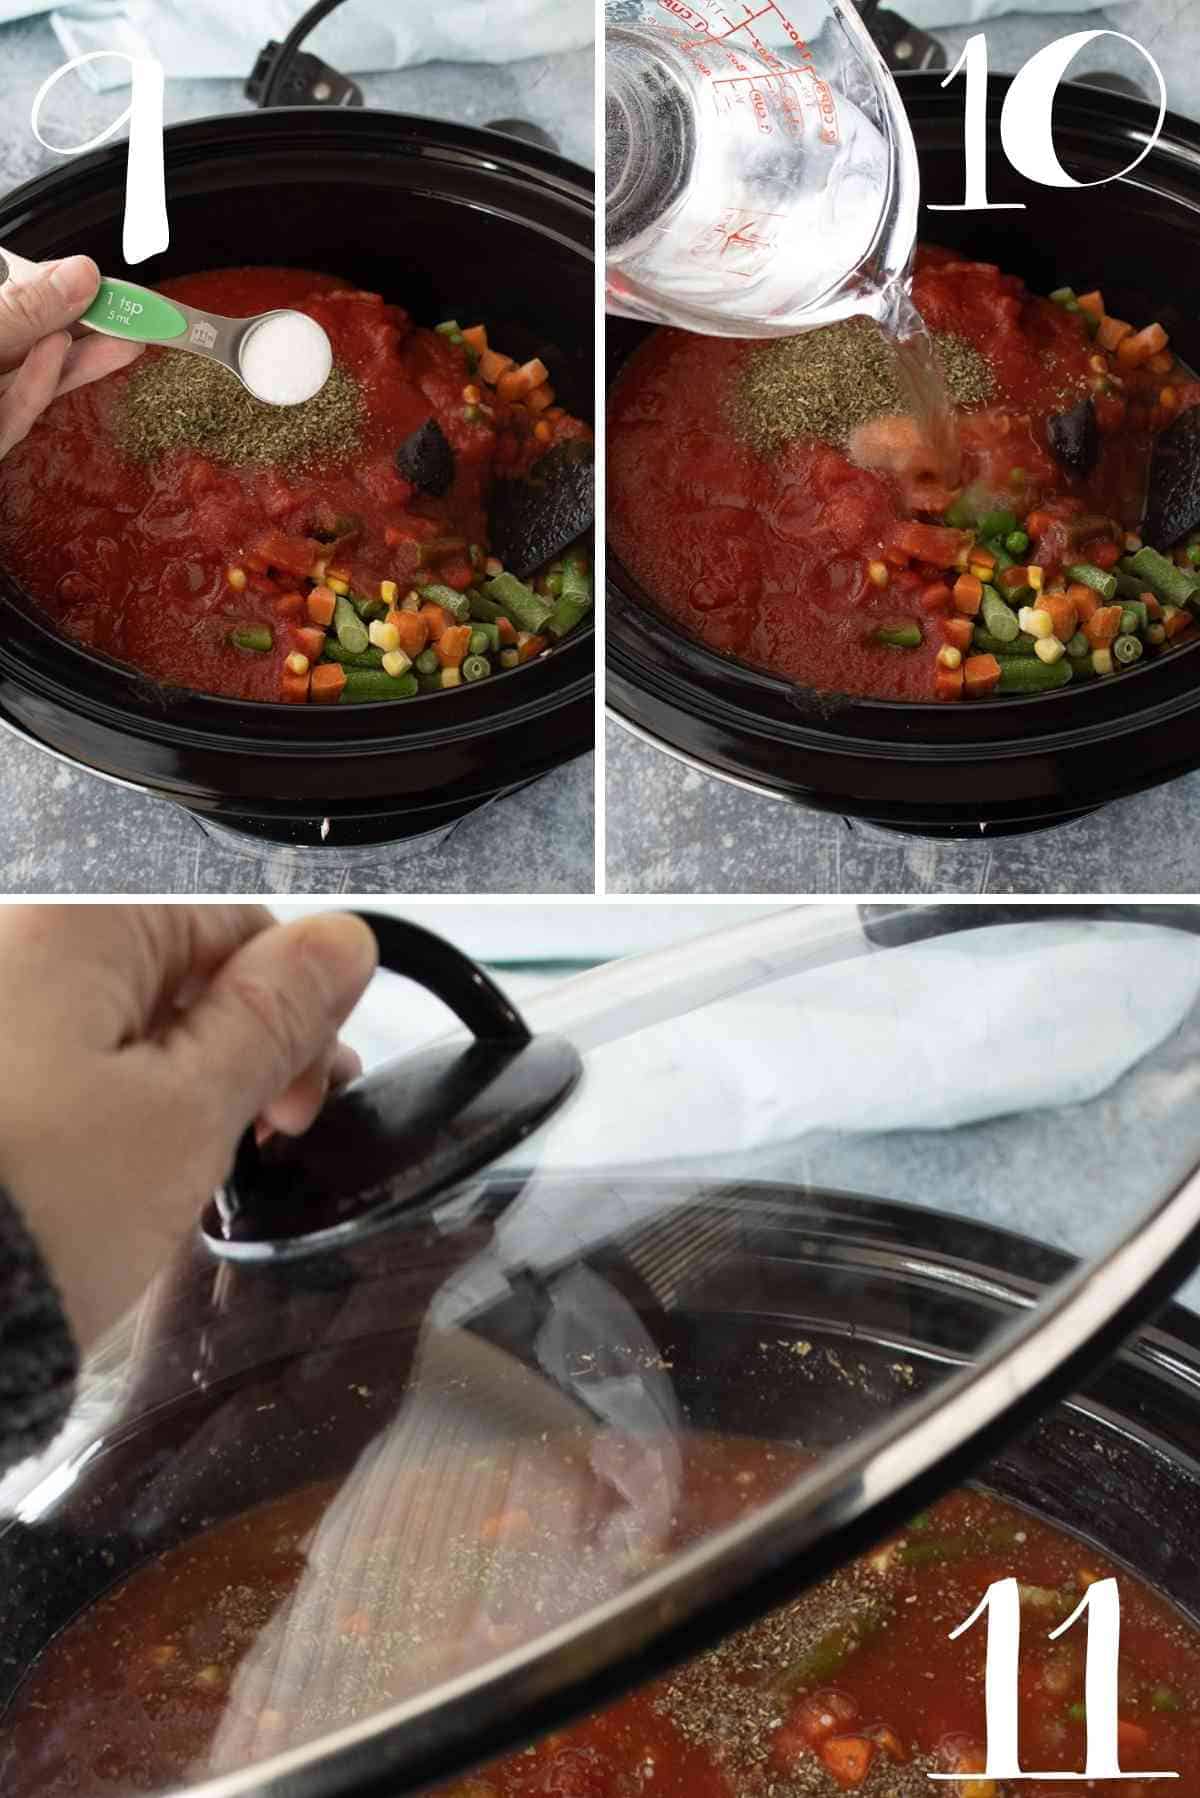 Add salt, water, stir and put lid on.